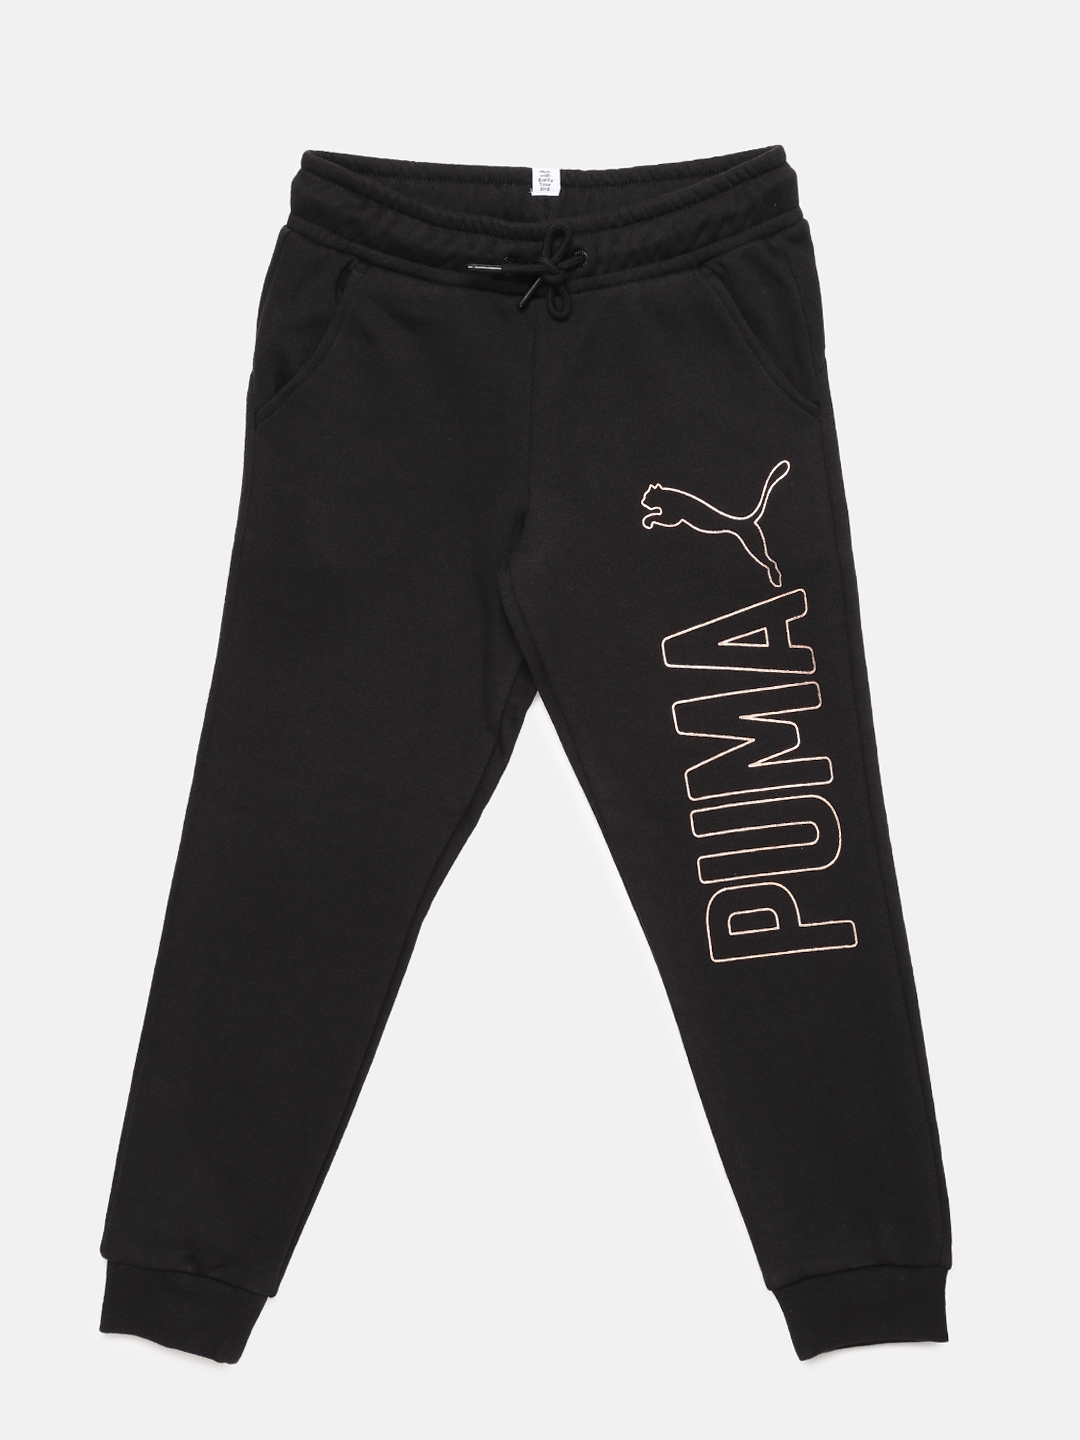 Buy Puma Girls Black Track Pants - Track Pants for Girls 2327809 | Myntra